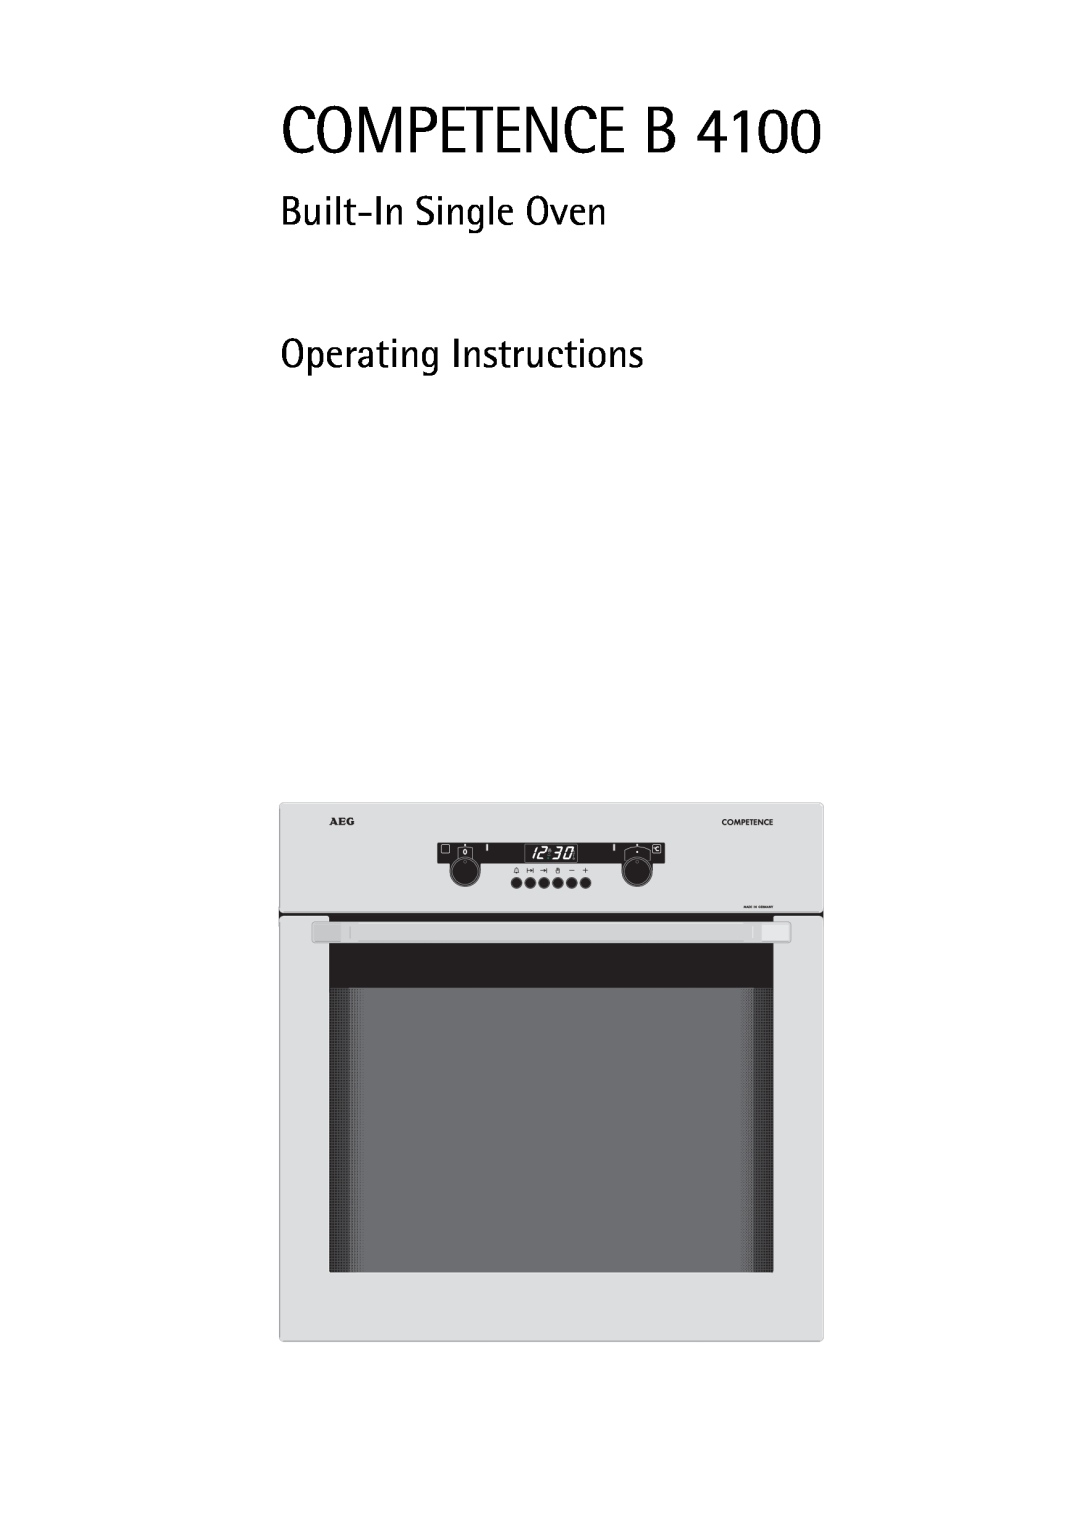 AEG B 4100 operating instructions Competence B, Built-InSingle Oven Operating Instructions 